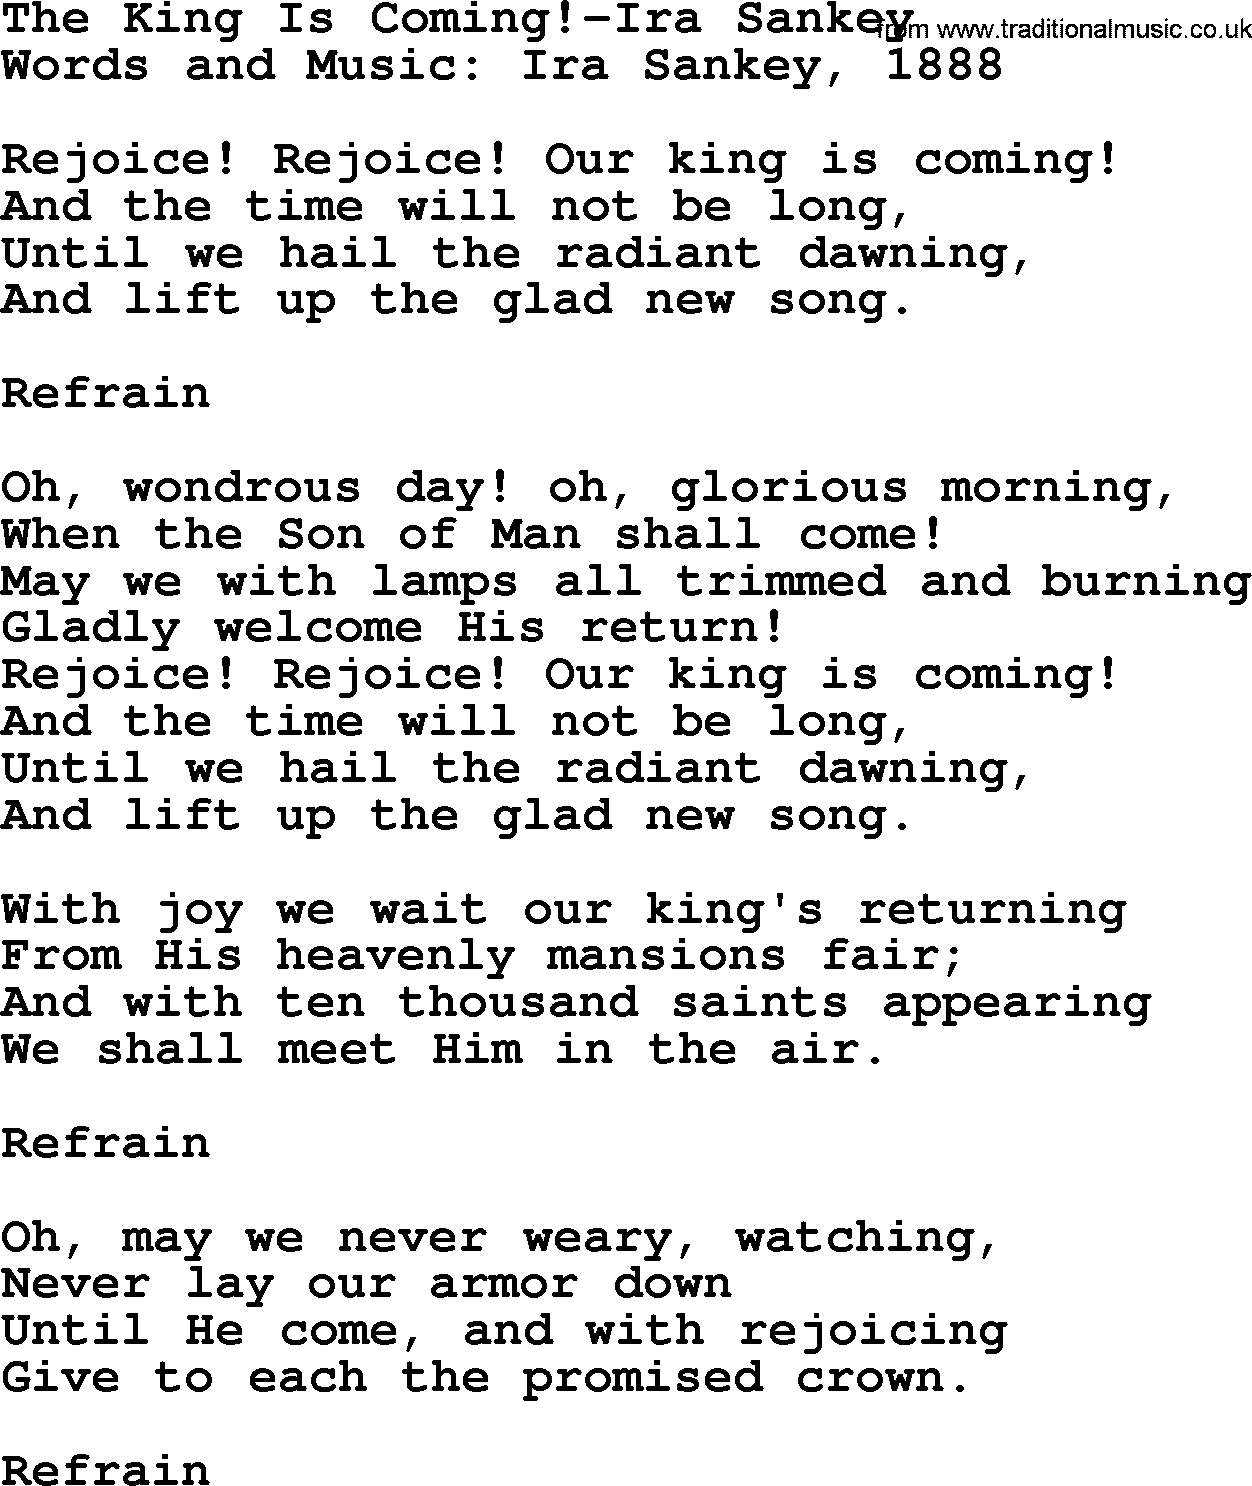 Ira Sankey hymn: The King Is Coming!-Ira Sankey, lyrics